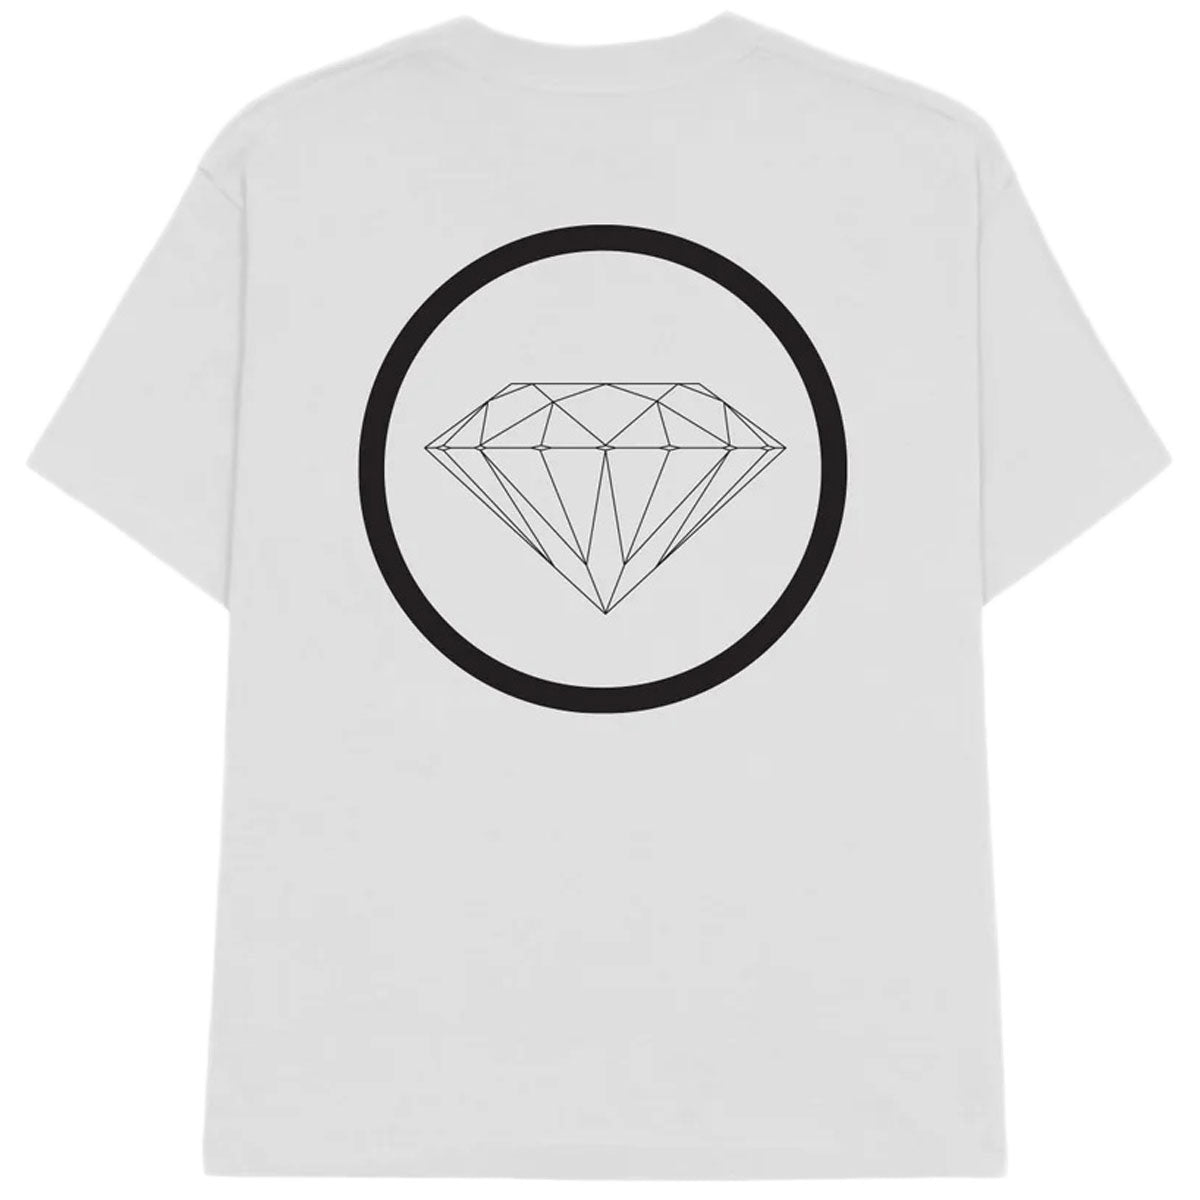 Diamond Supply Co. Brilliant Circle T-Shirt - White image 2